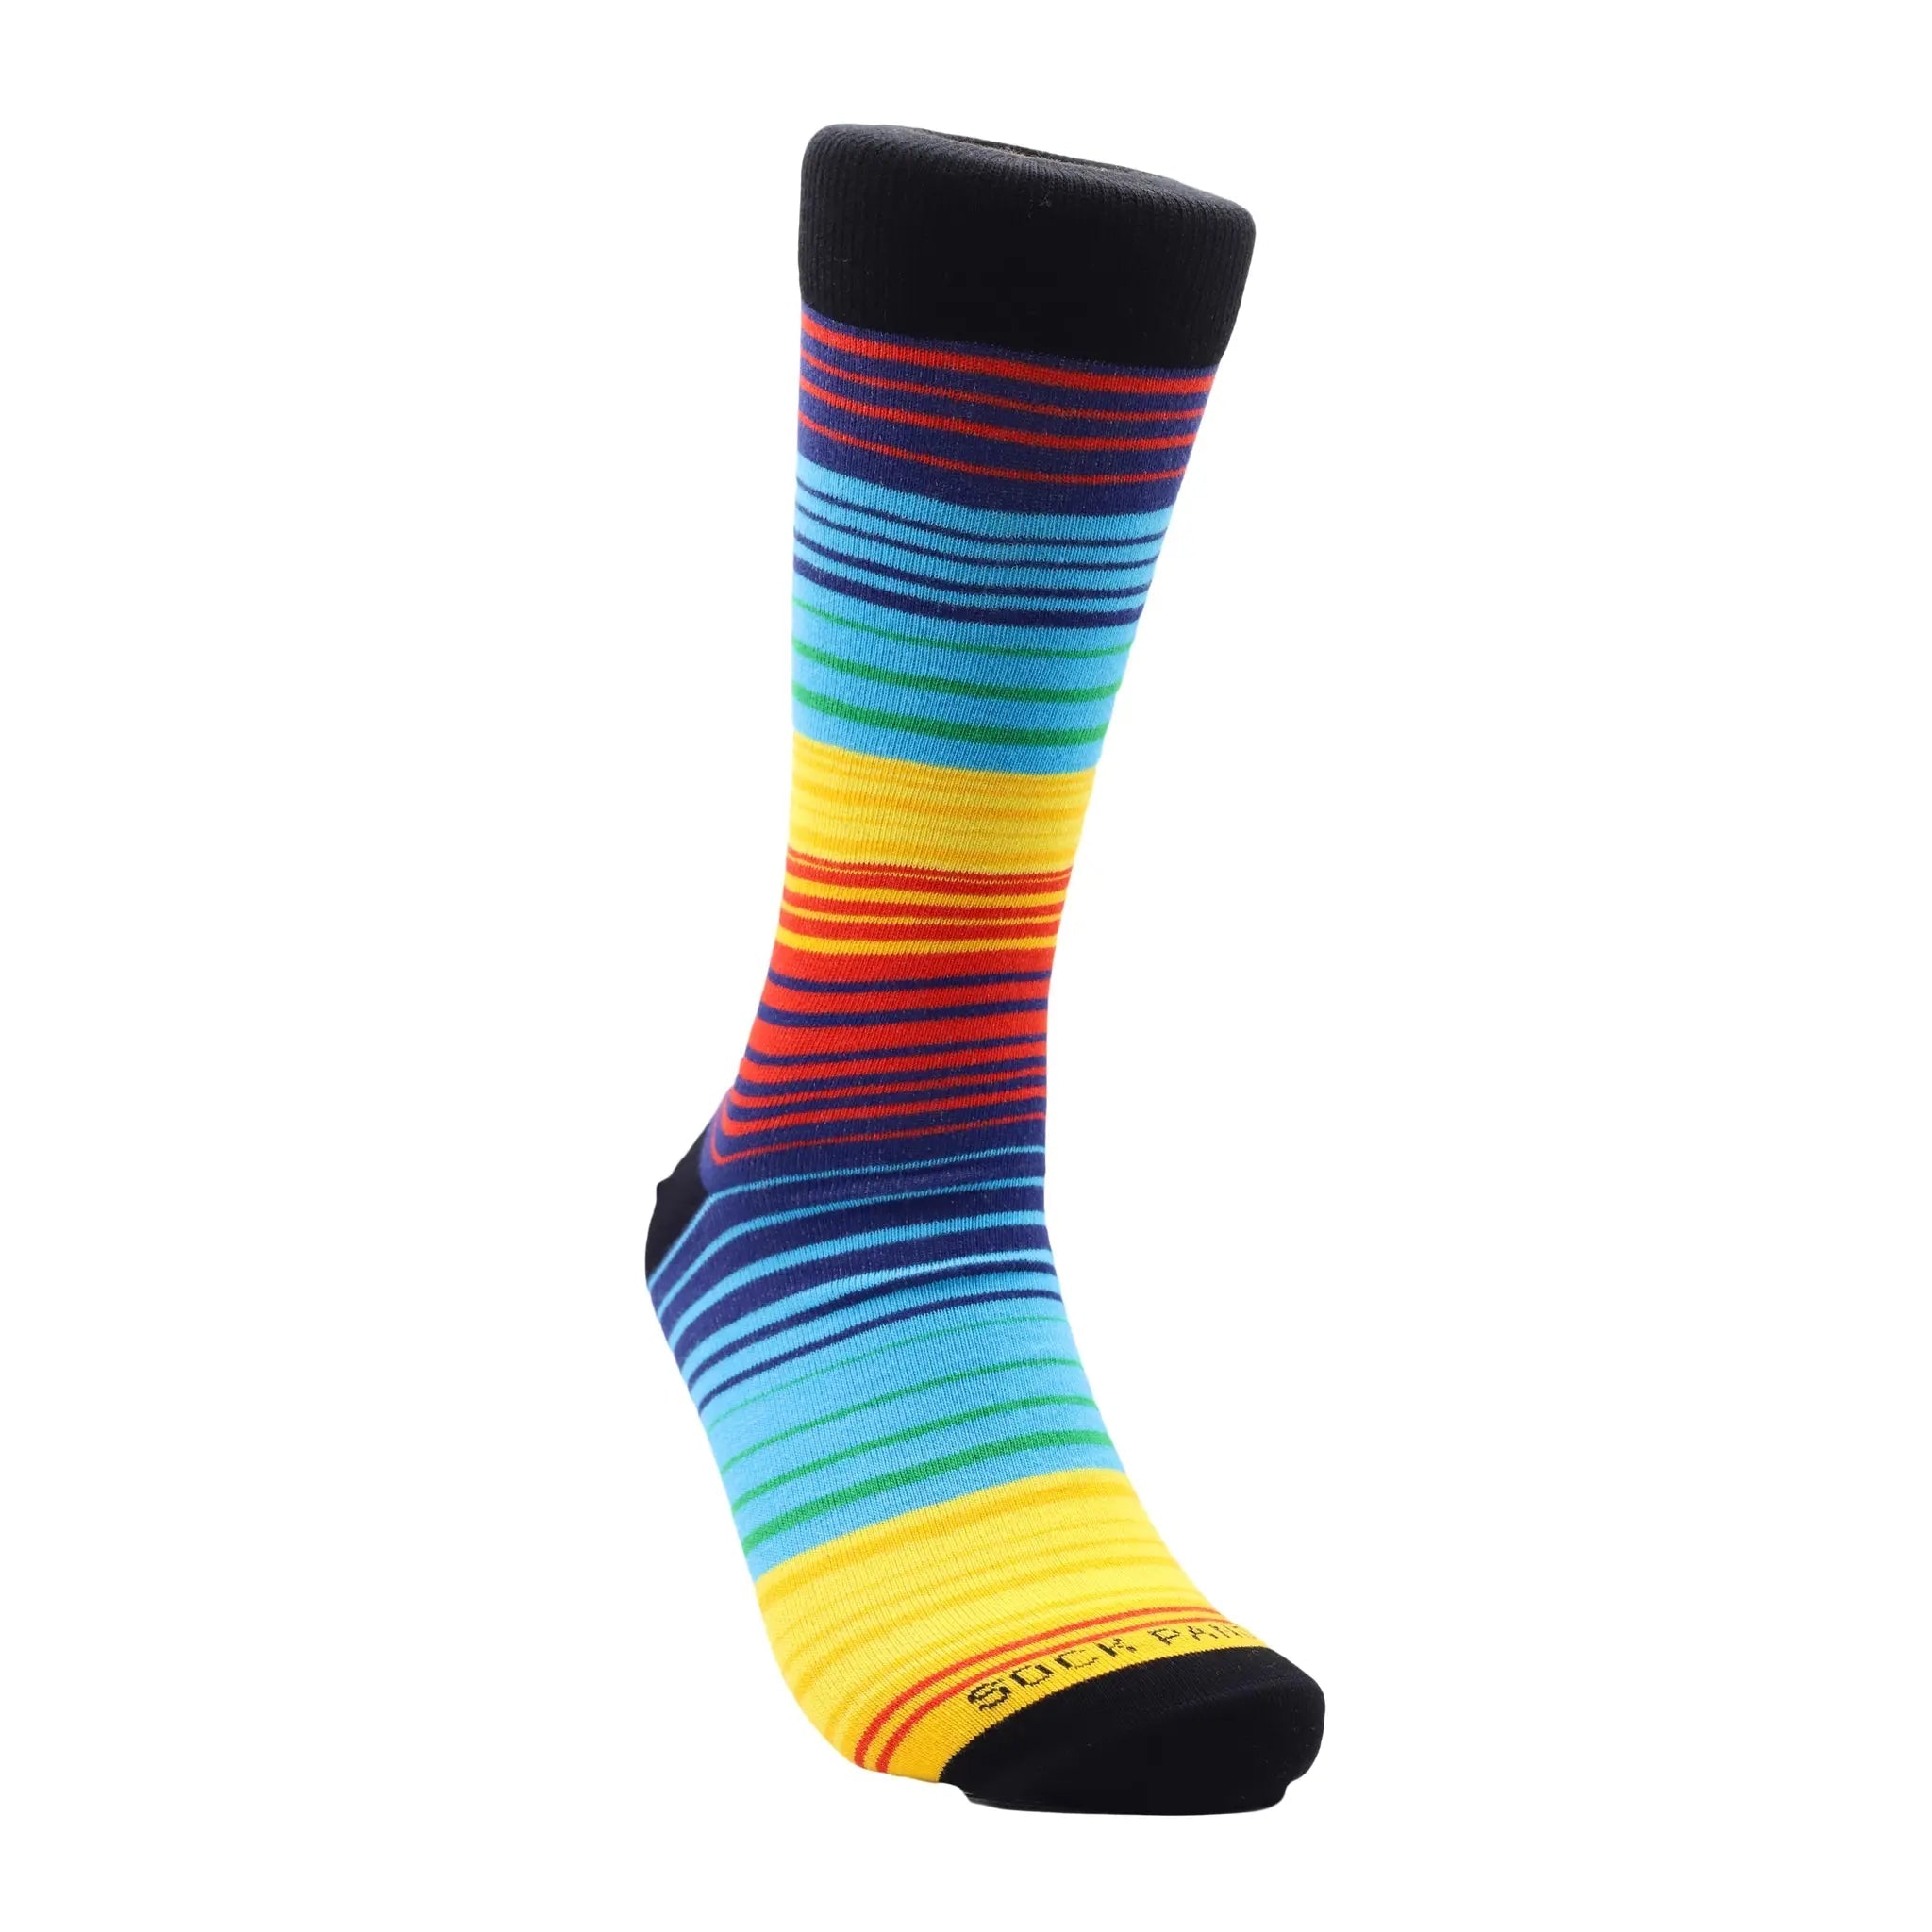 Vibrant Rainbow Stripes Socks from the Sock Panda